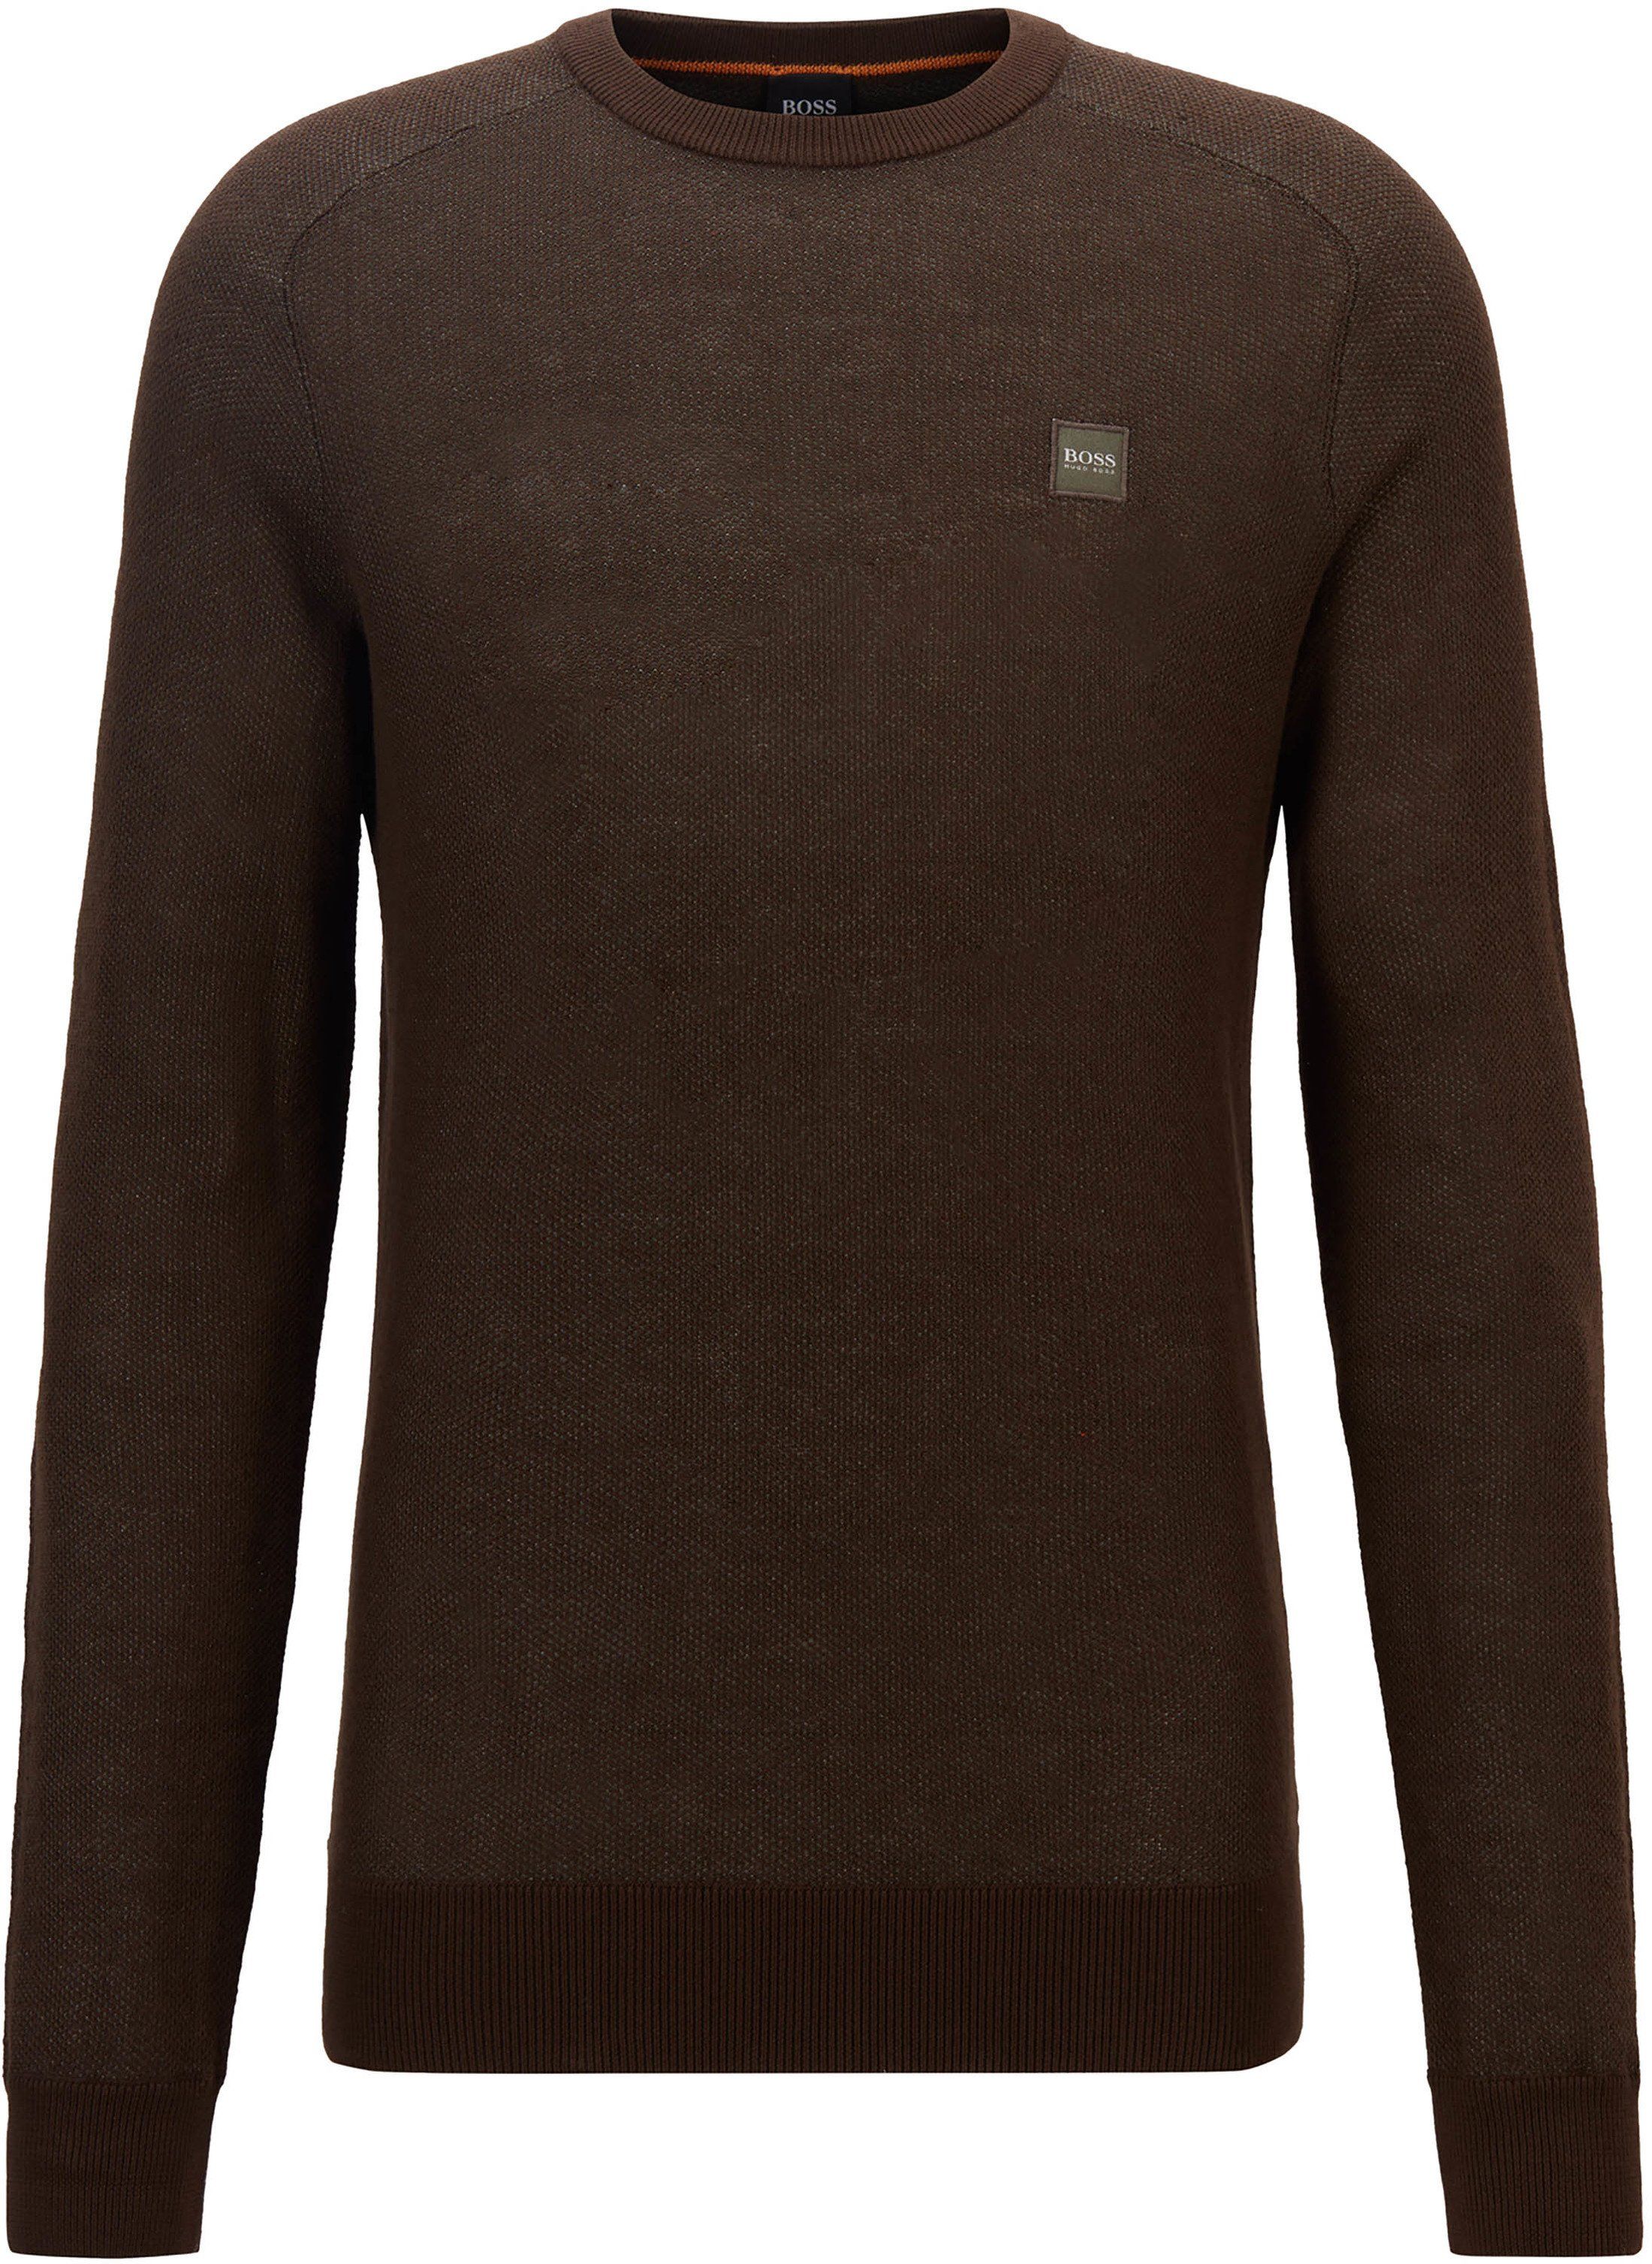 Hugo Boss Sweater Amador Khaki size XL